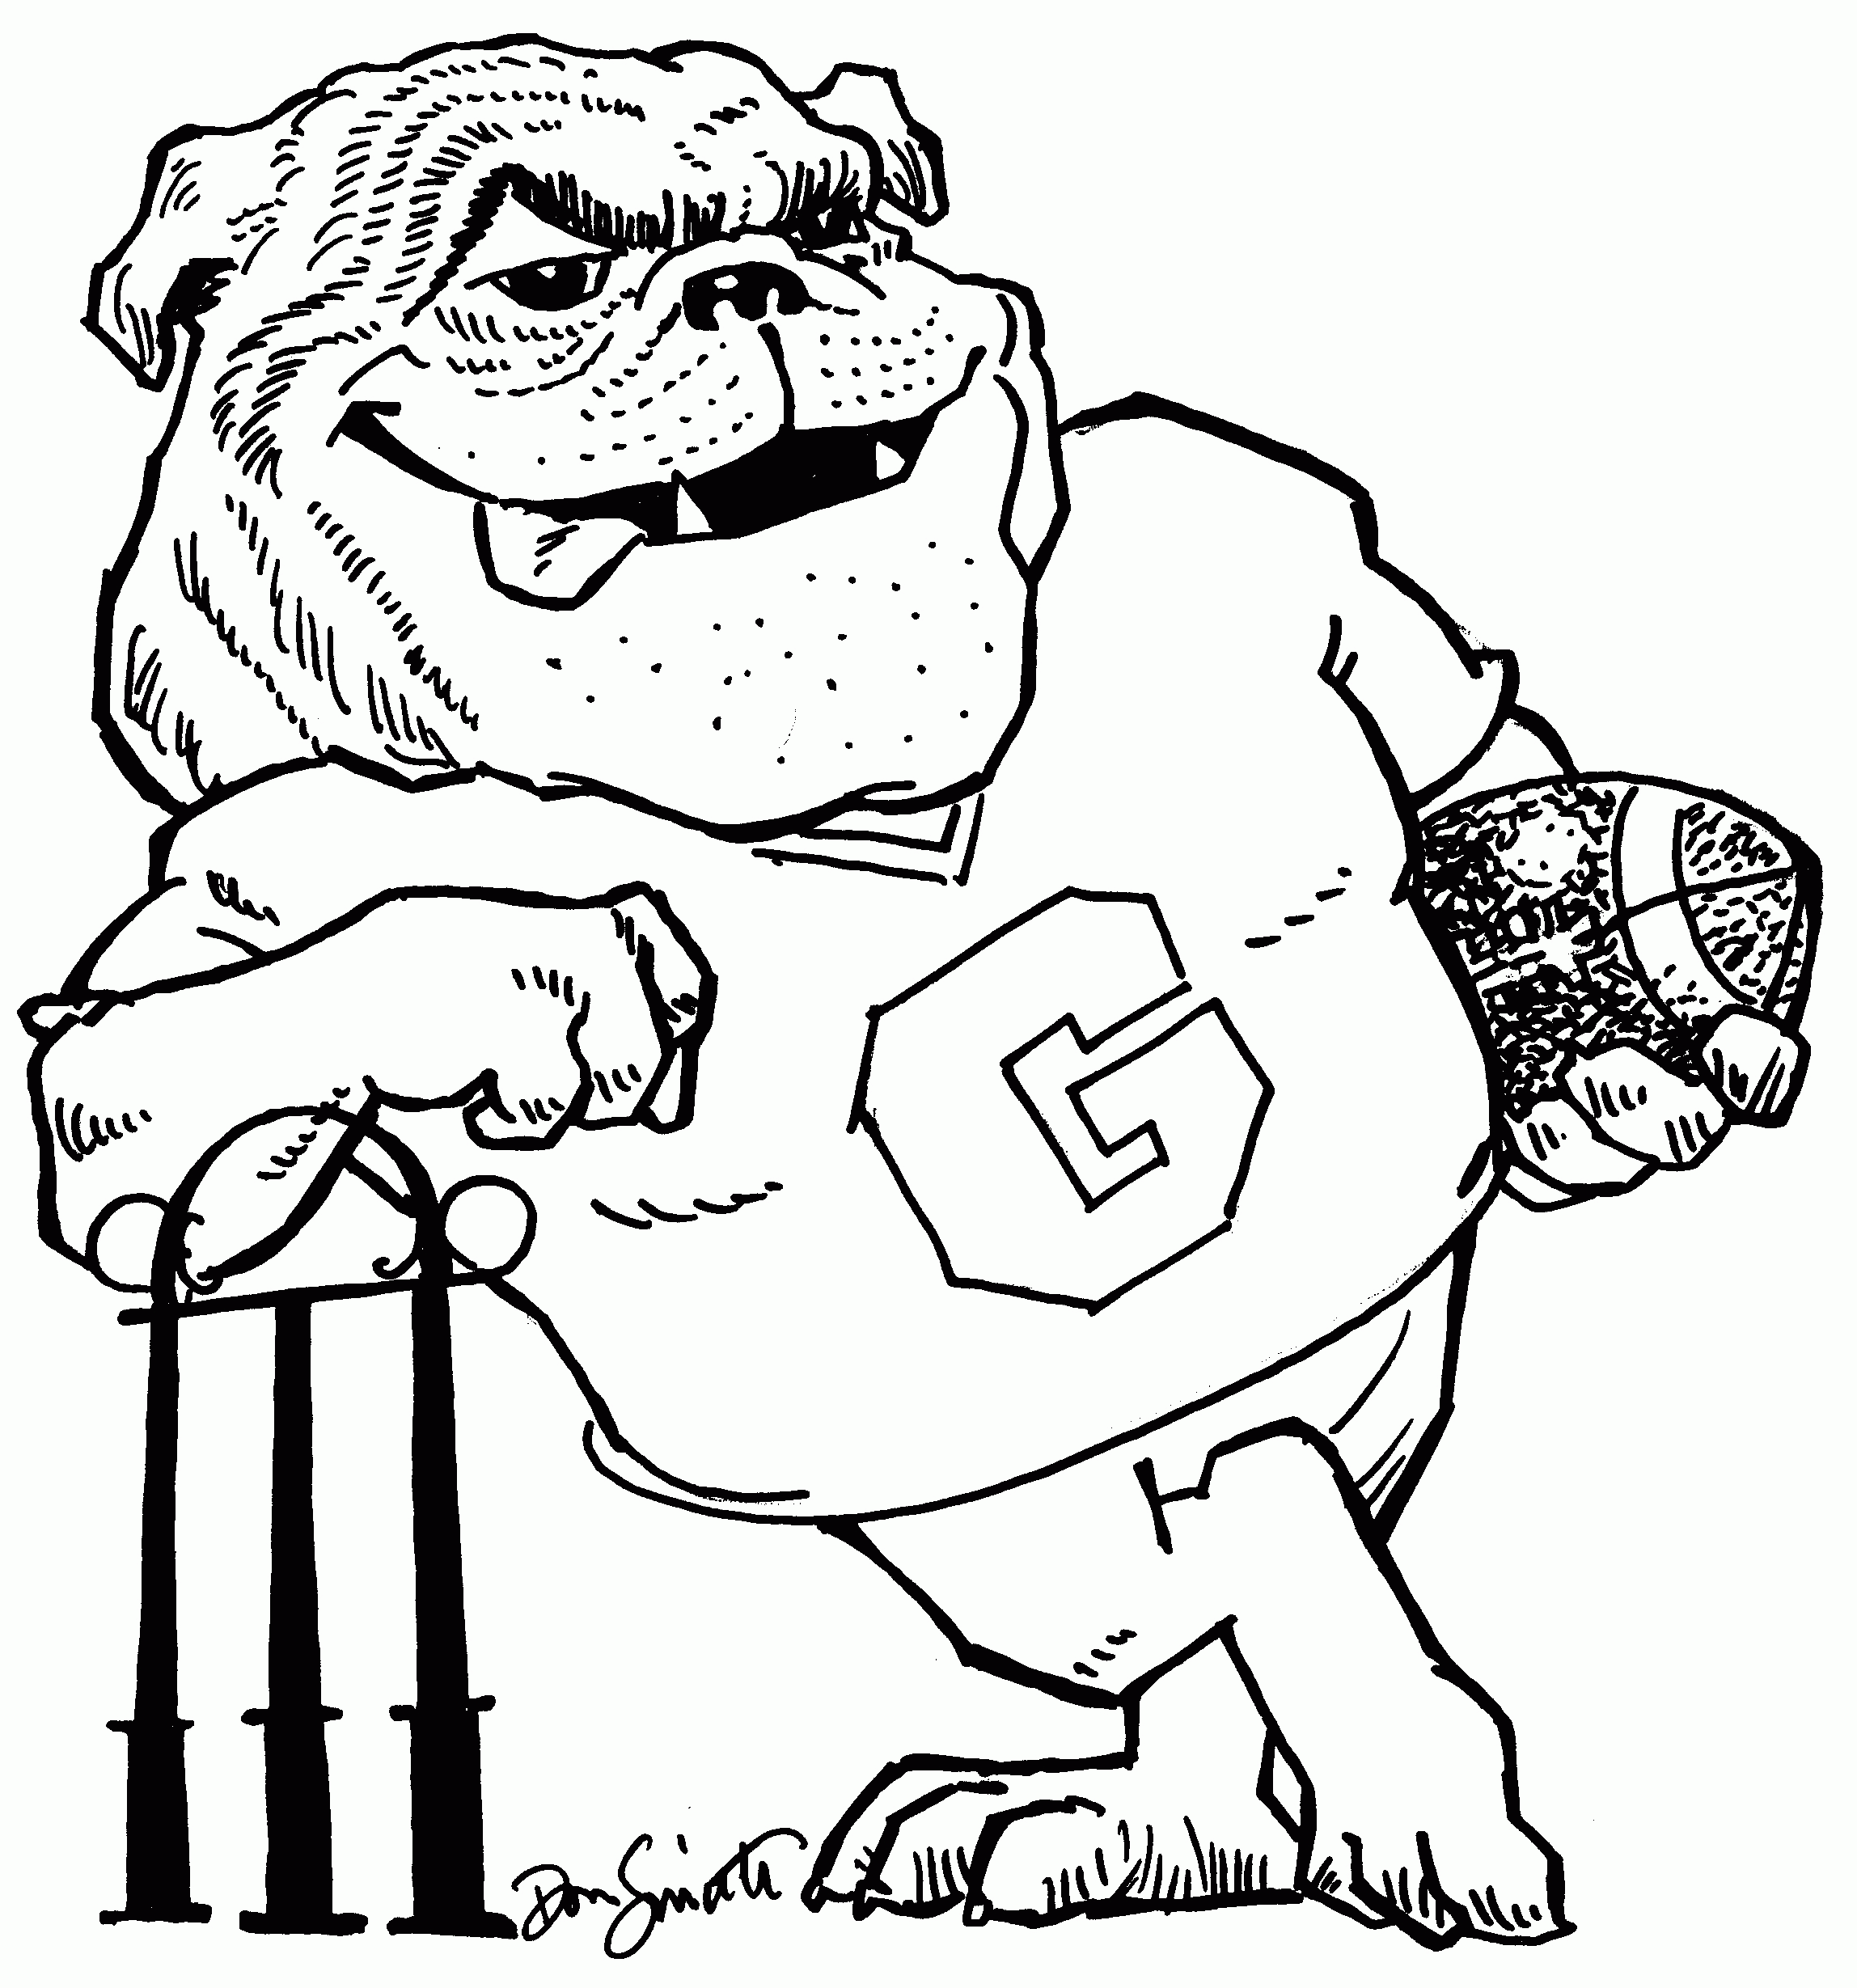  Georgia Bulldogs Coloring Pages - Georgia Bulldogs